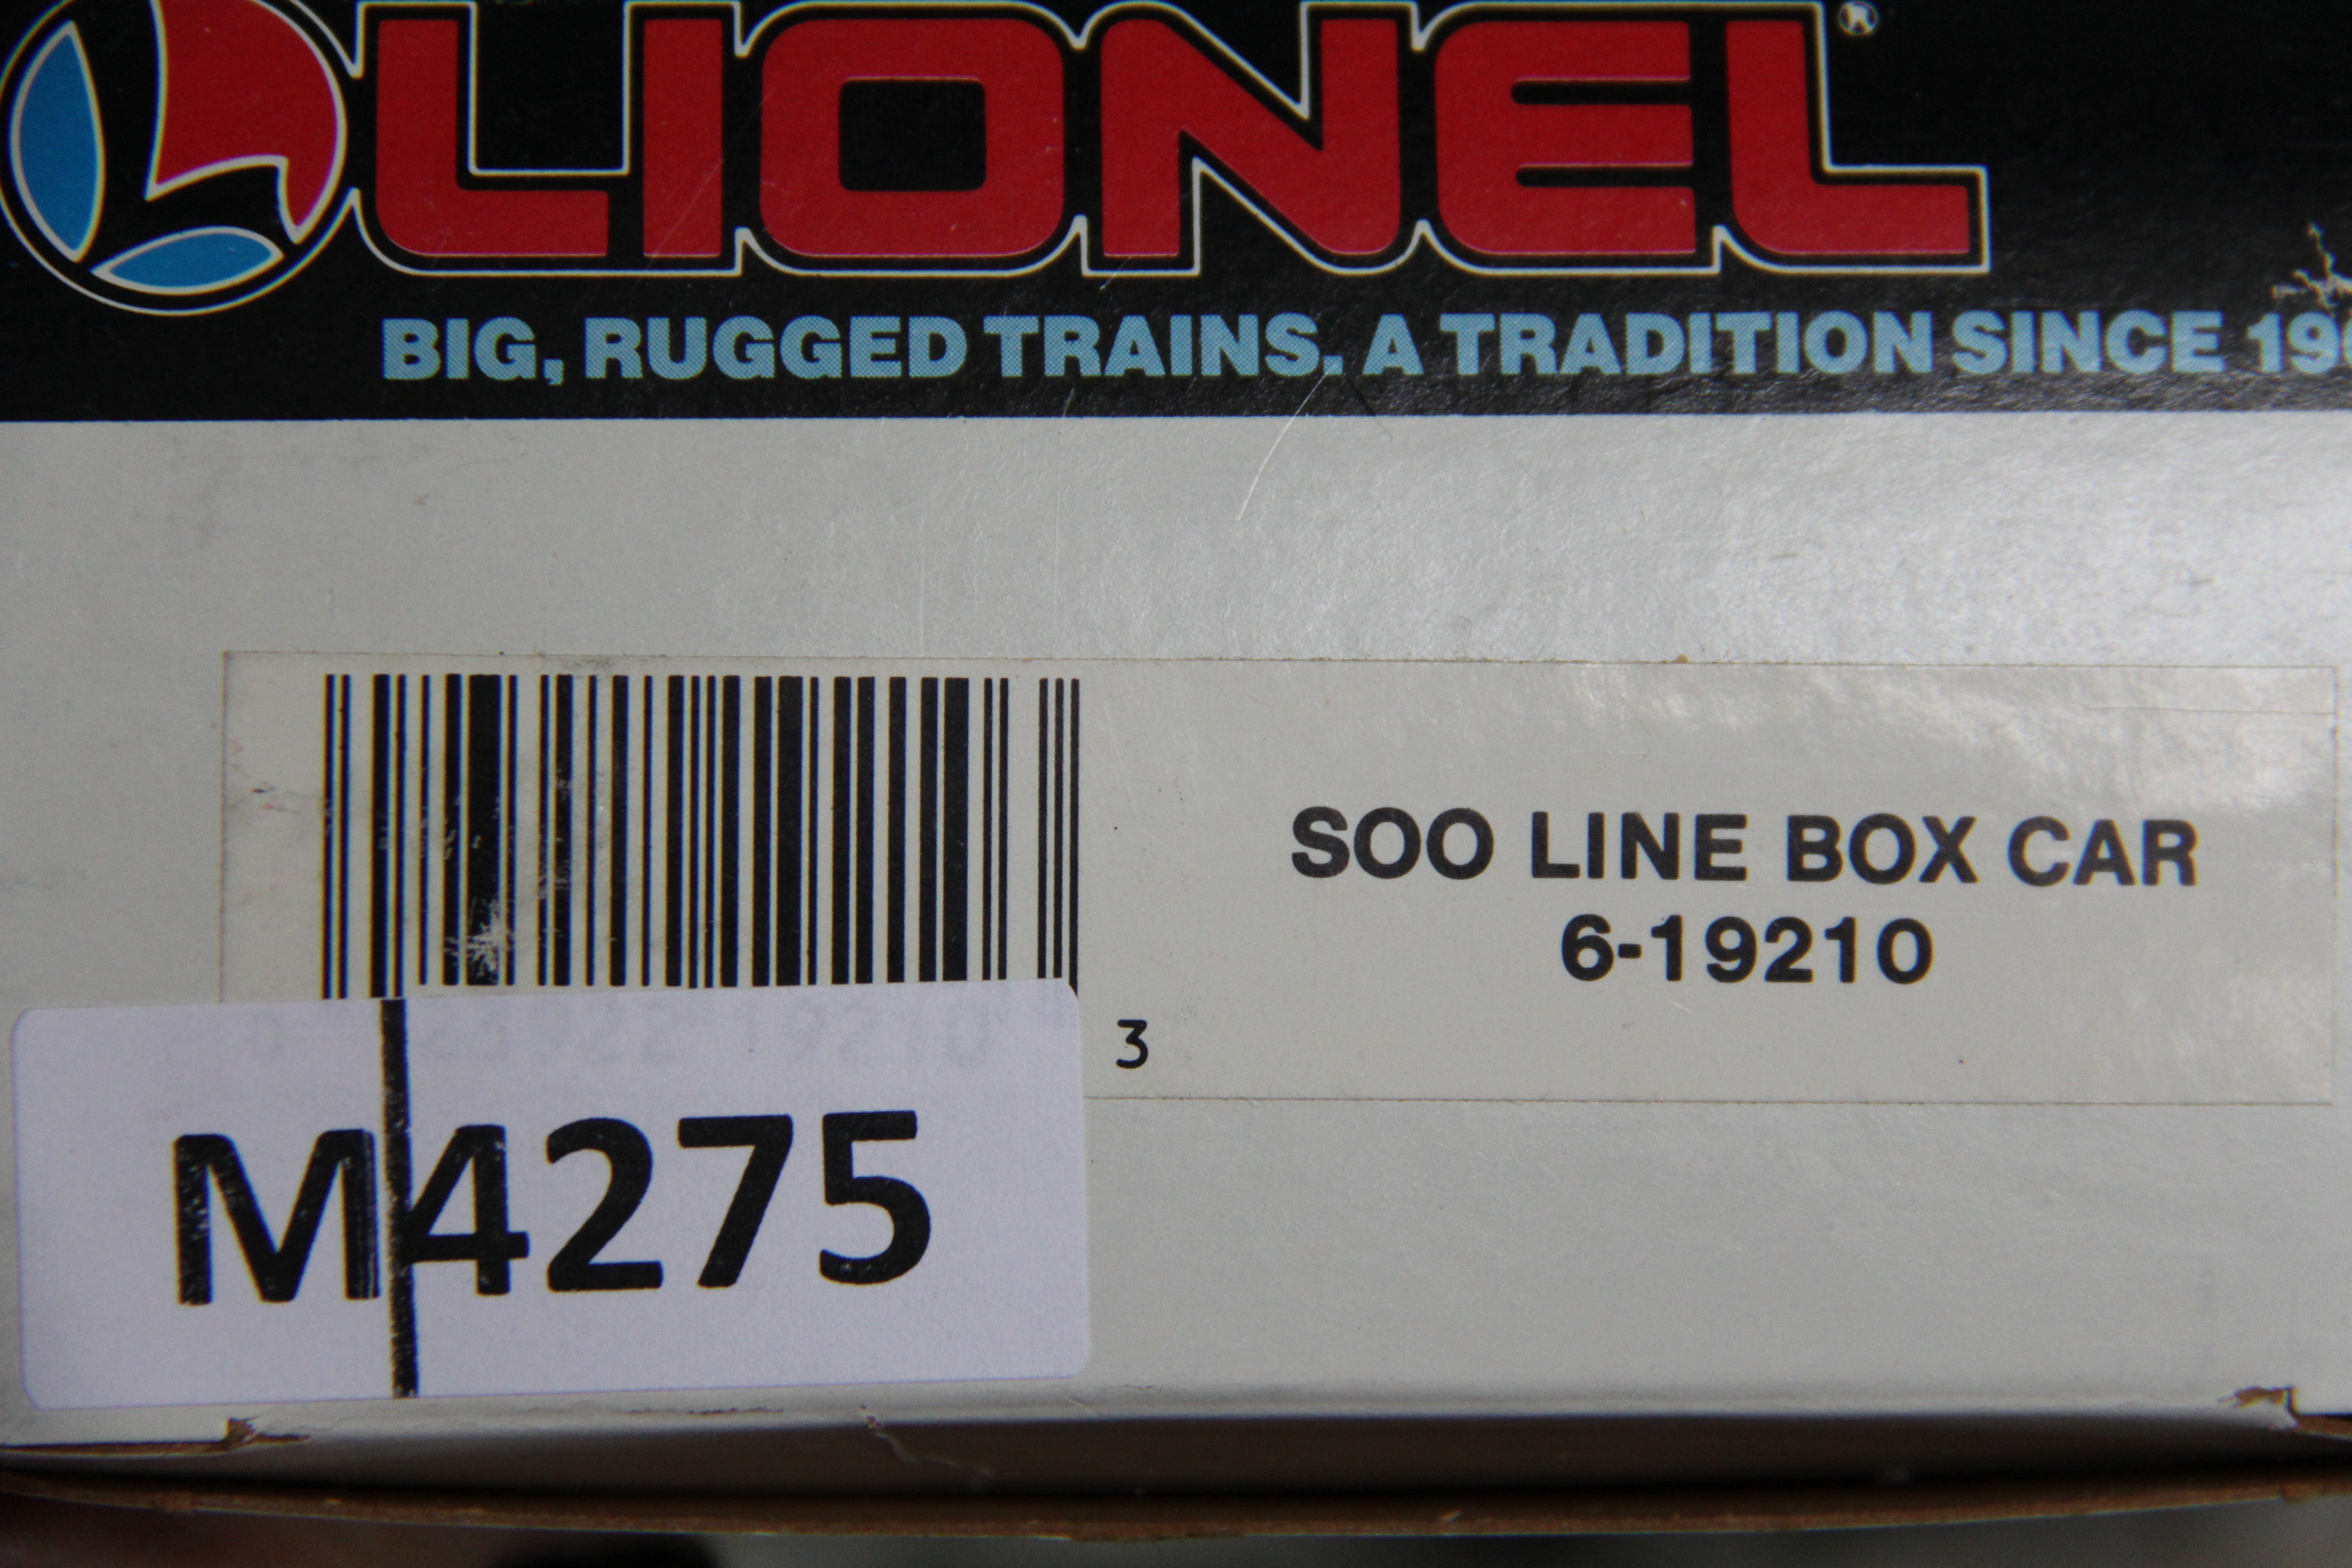 Lionel 6-19210 Soo Line Box Car-Second hand-M4275